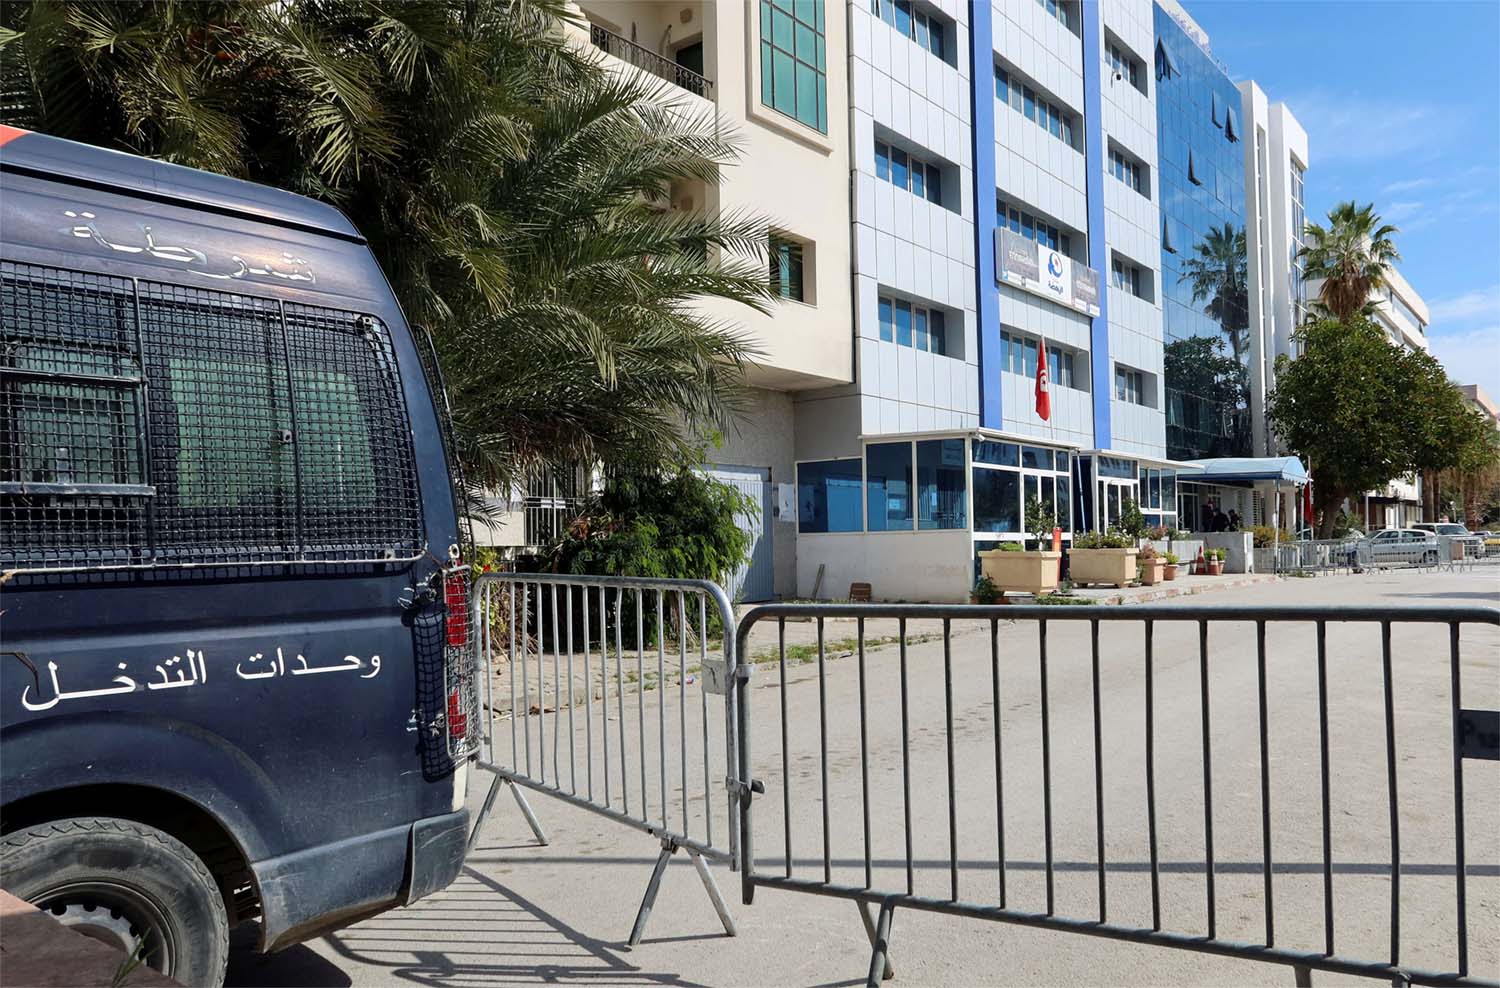 Police raided Ennahda party headquarters